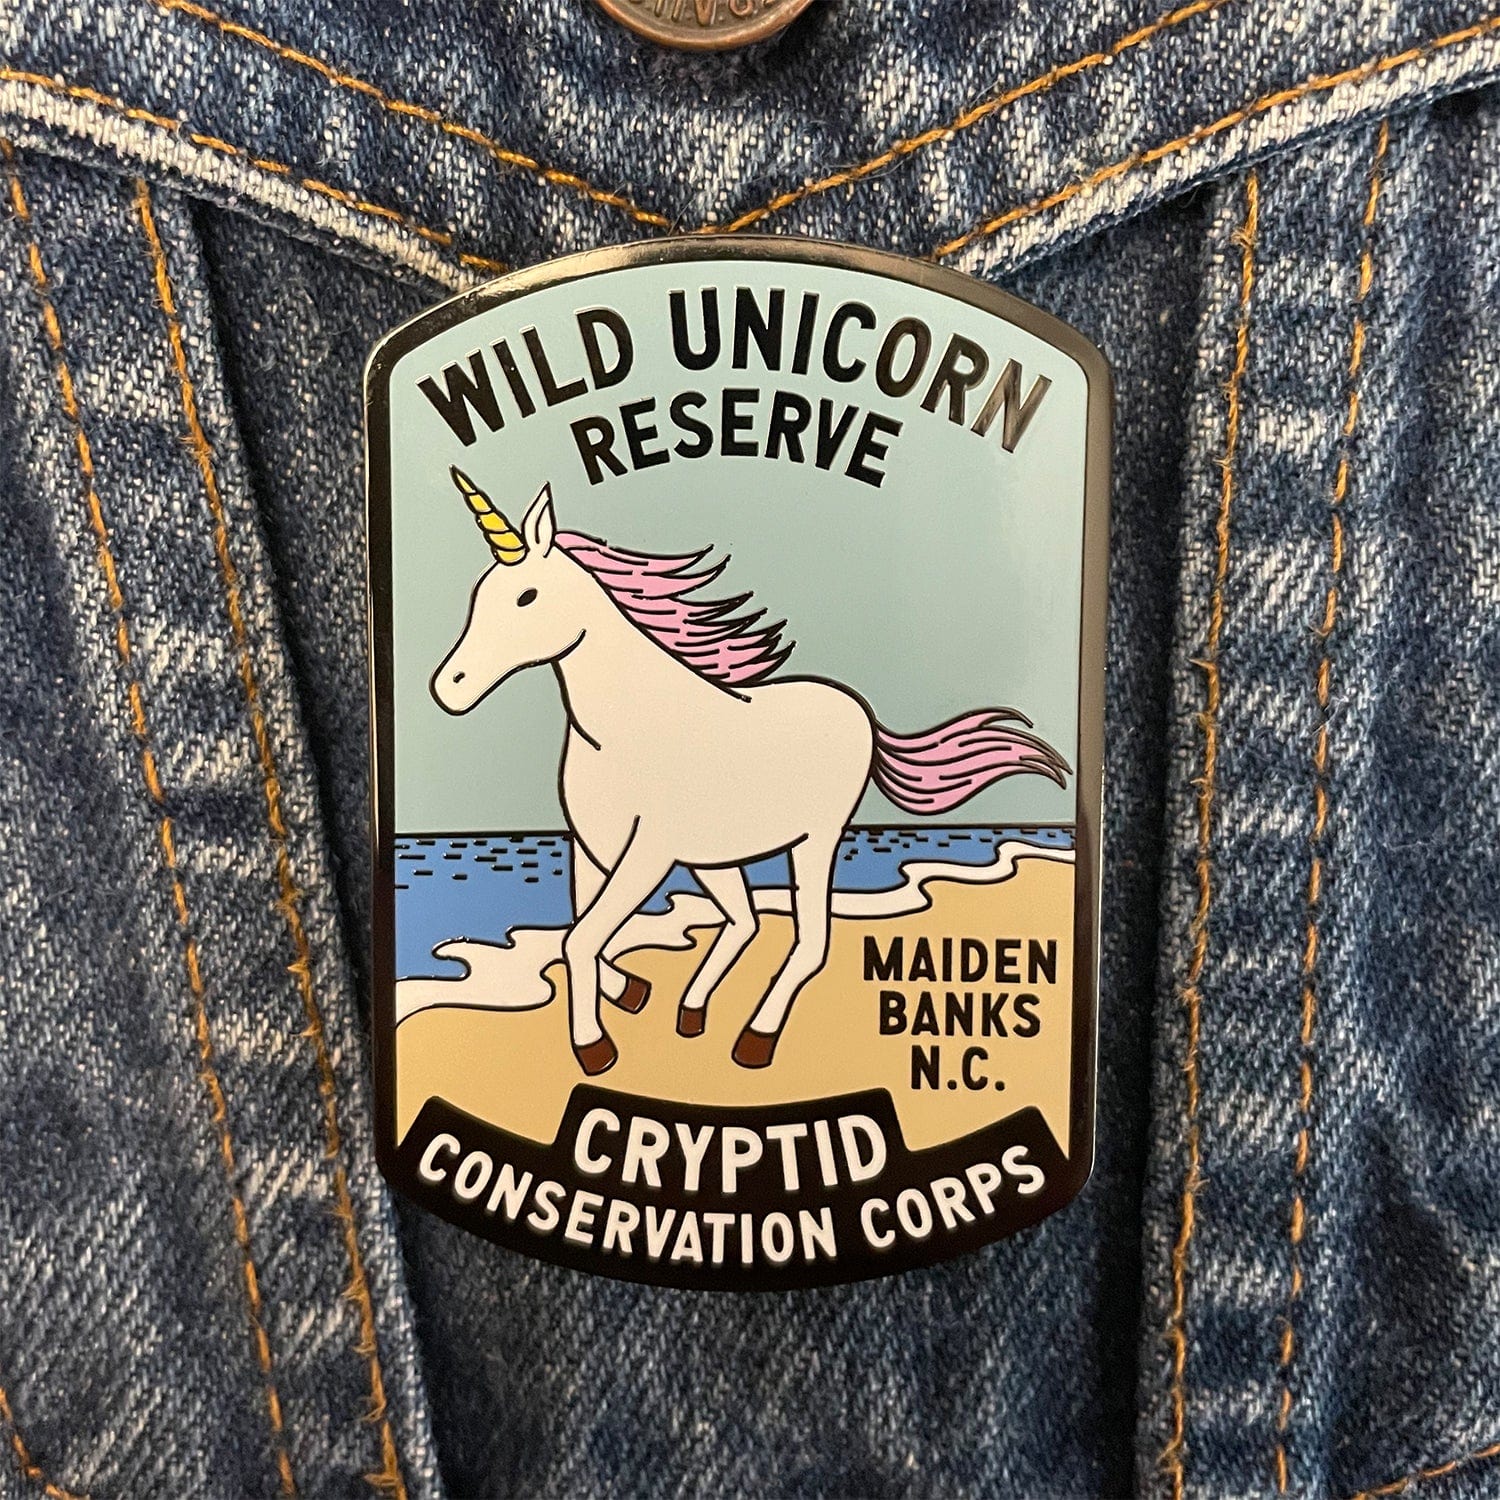 Wild Unicorn Reserve Pin